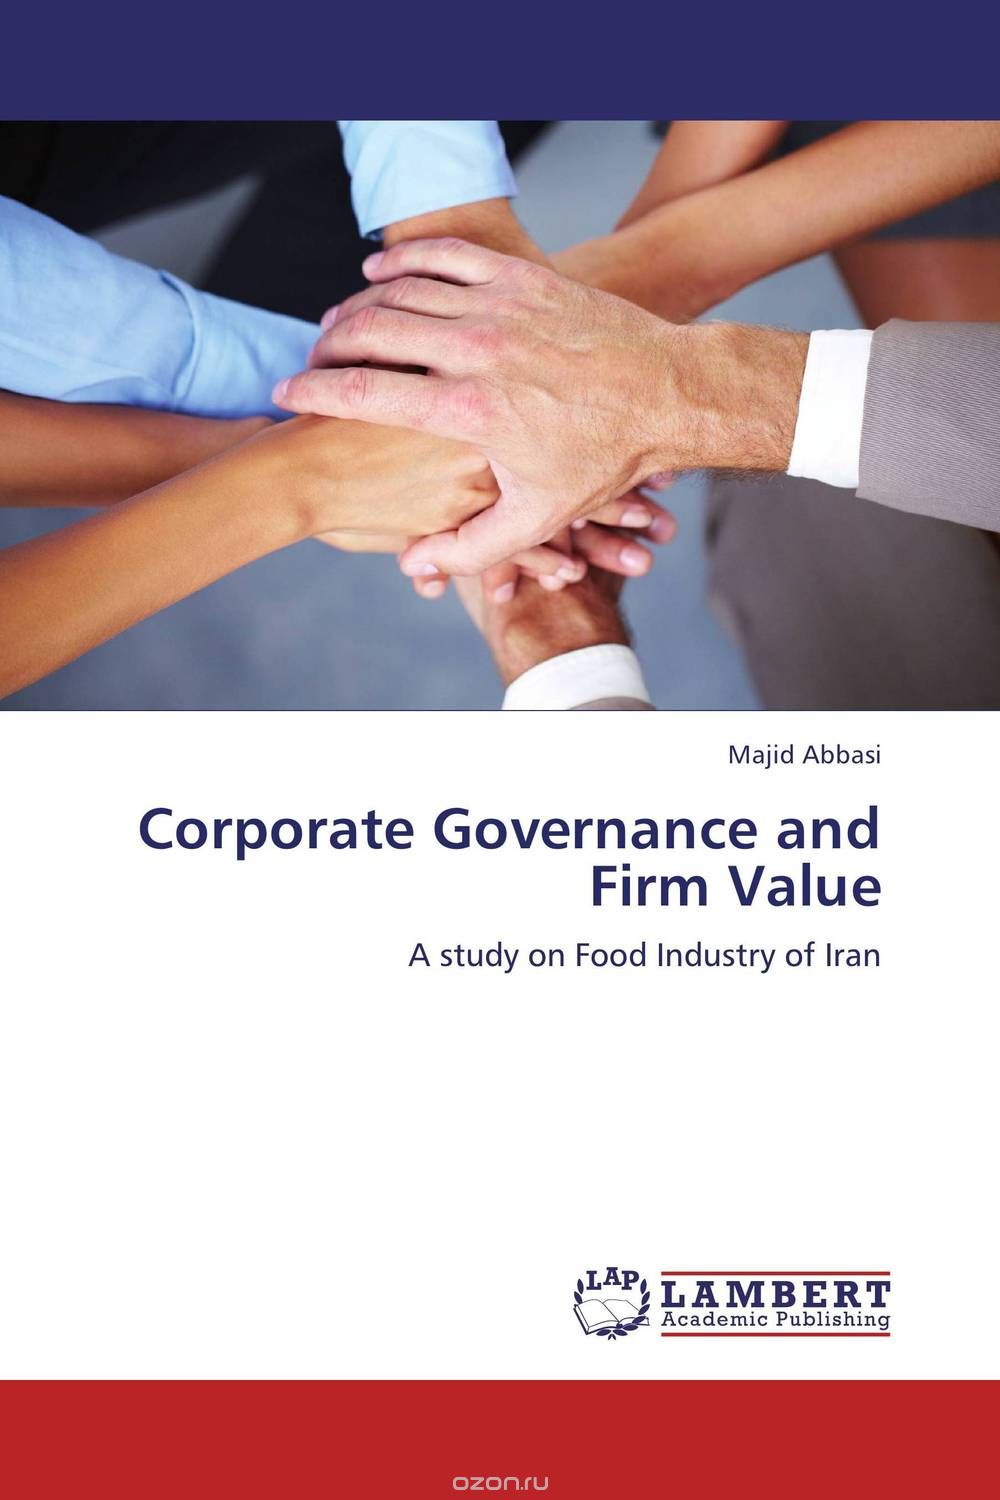 Скачать книгу "Corporate Governance and Firm Value"